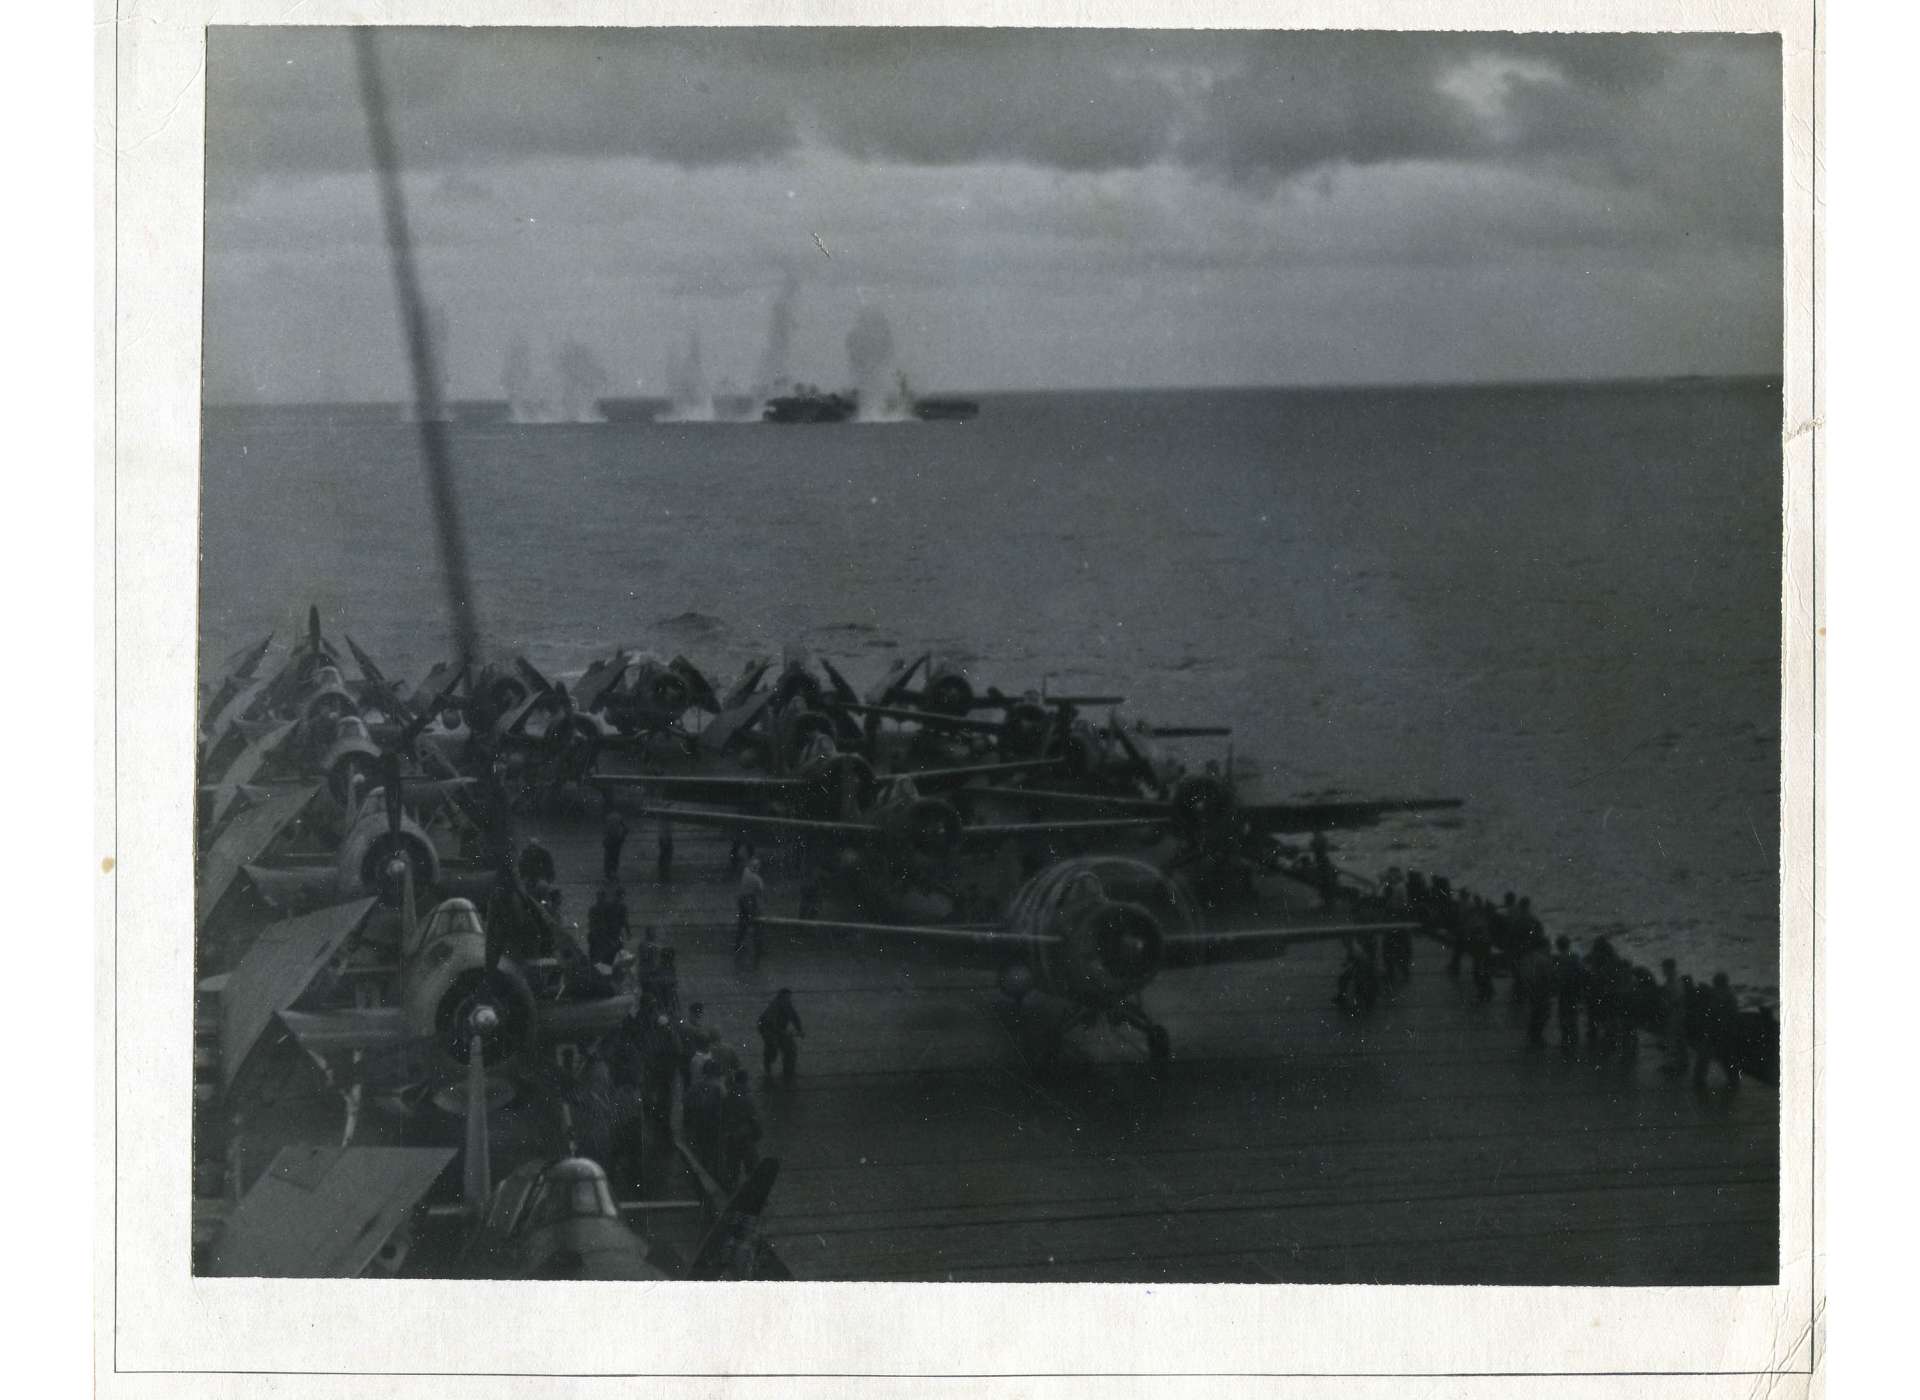 Japanese salvos dropping near USS White Plains (CVE-66) as seen from USS Kitkun Bay (CVE-71) during Battle off Samar.